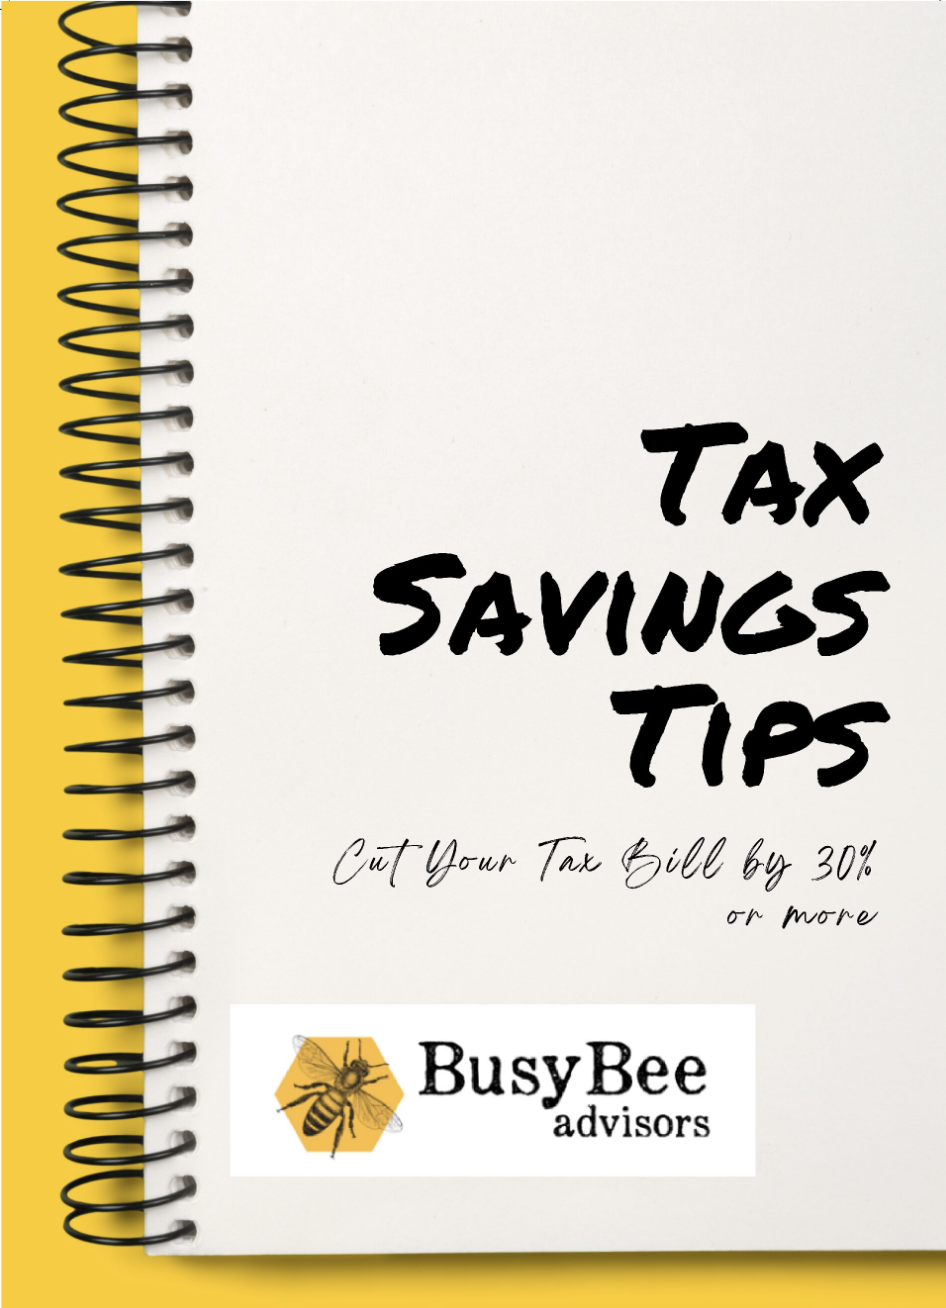 Tax Savings Tips